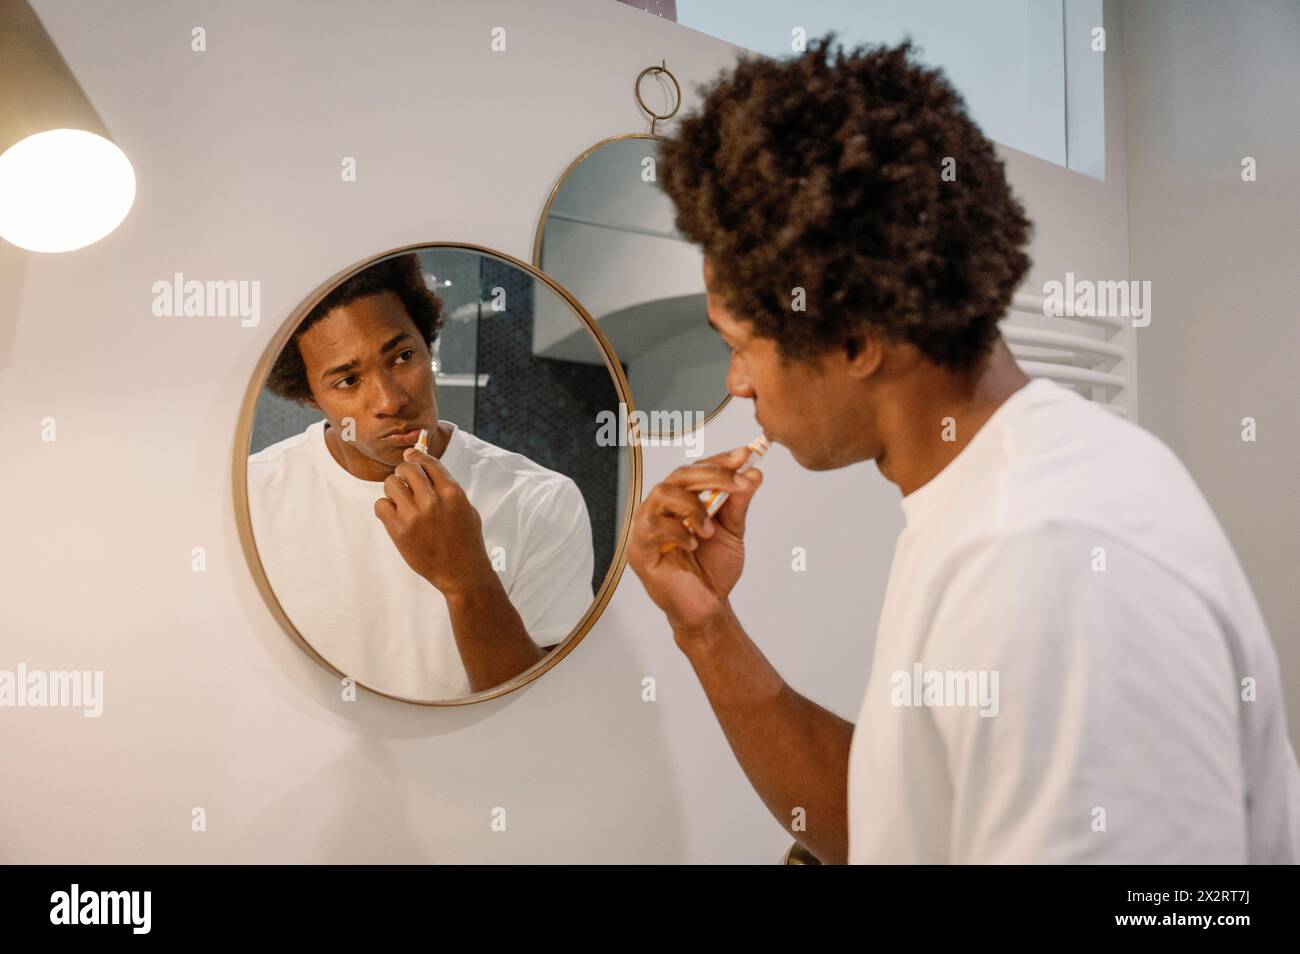 Man brushing teeth looking at mirror in bathroom Stock Photo